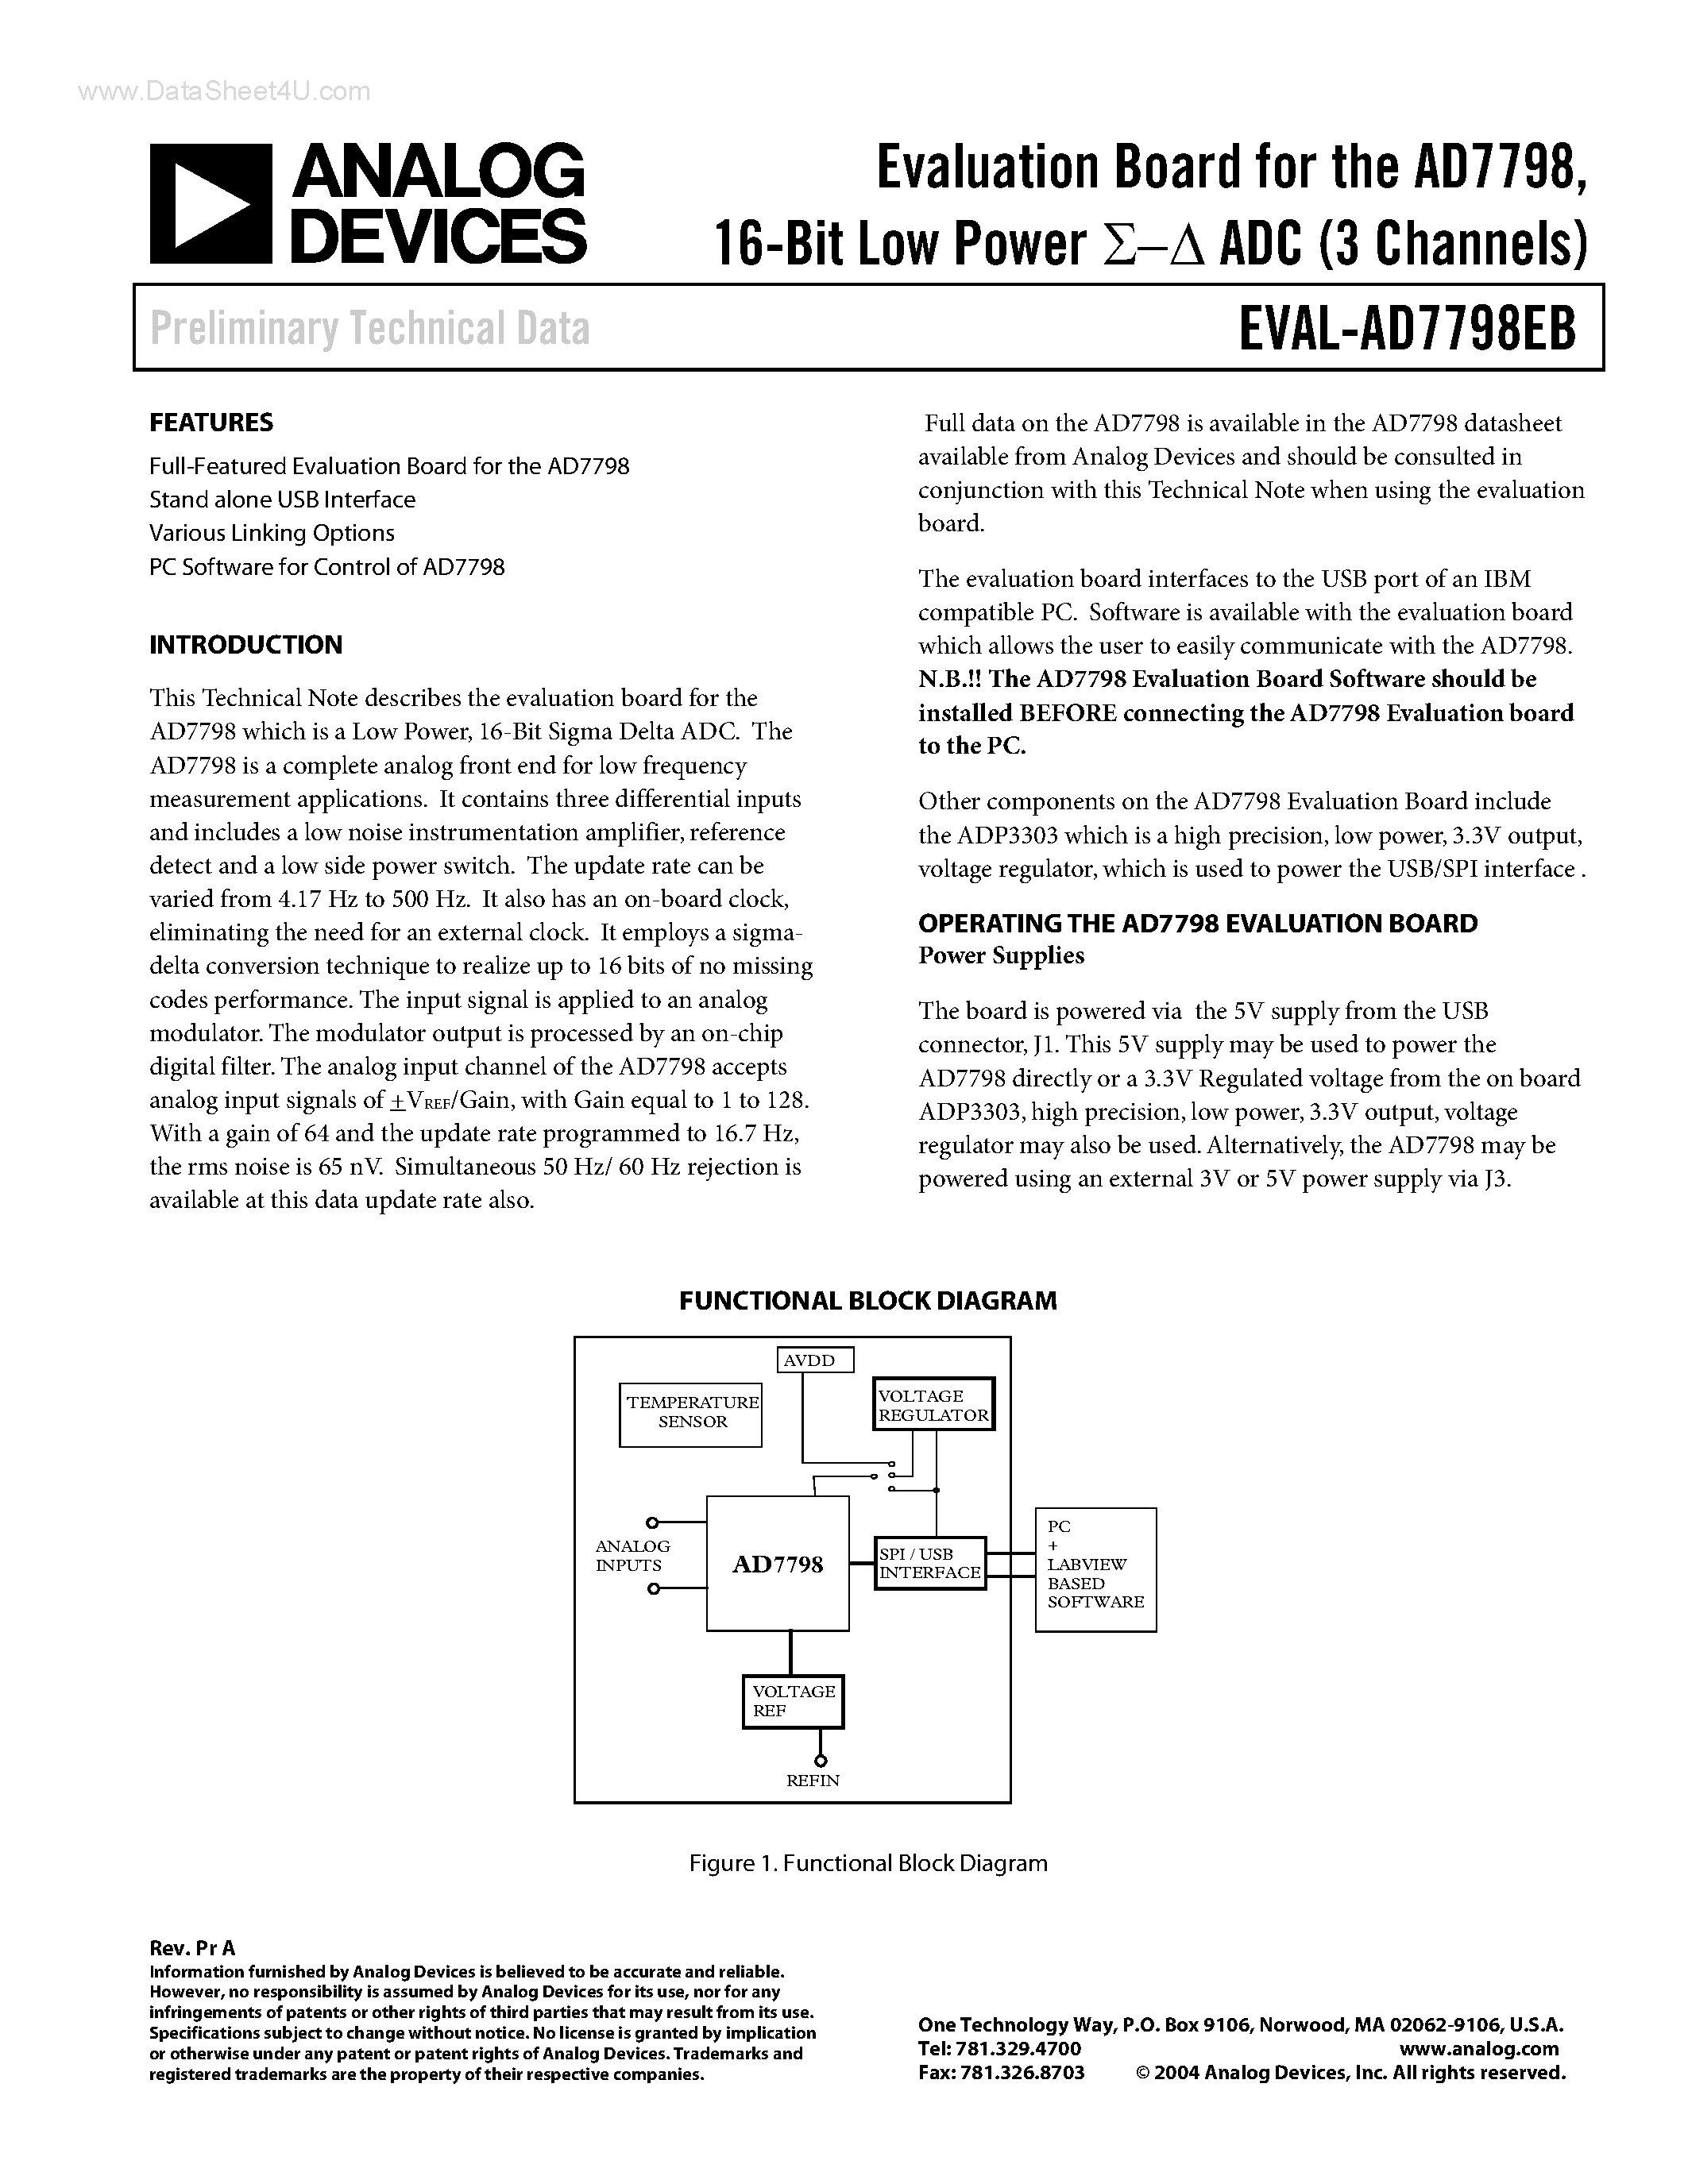 Datasheet EVAL-AD7798EB - 16-Bit Low Power ADC page 1